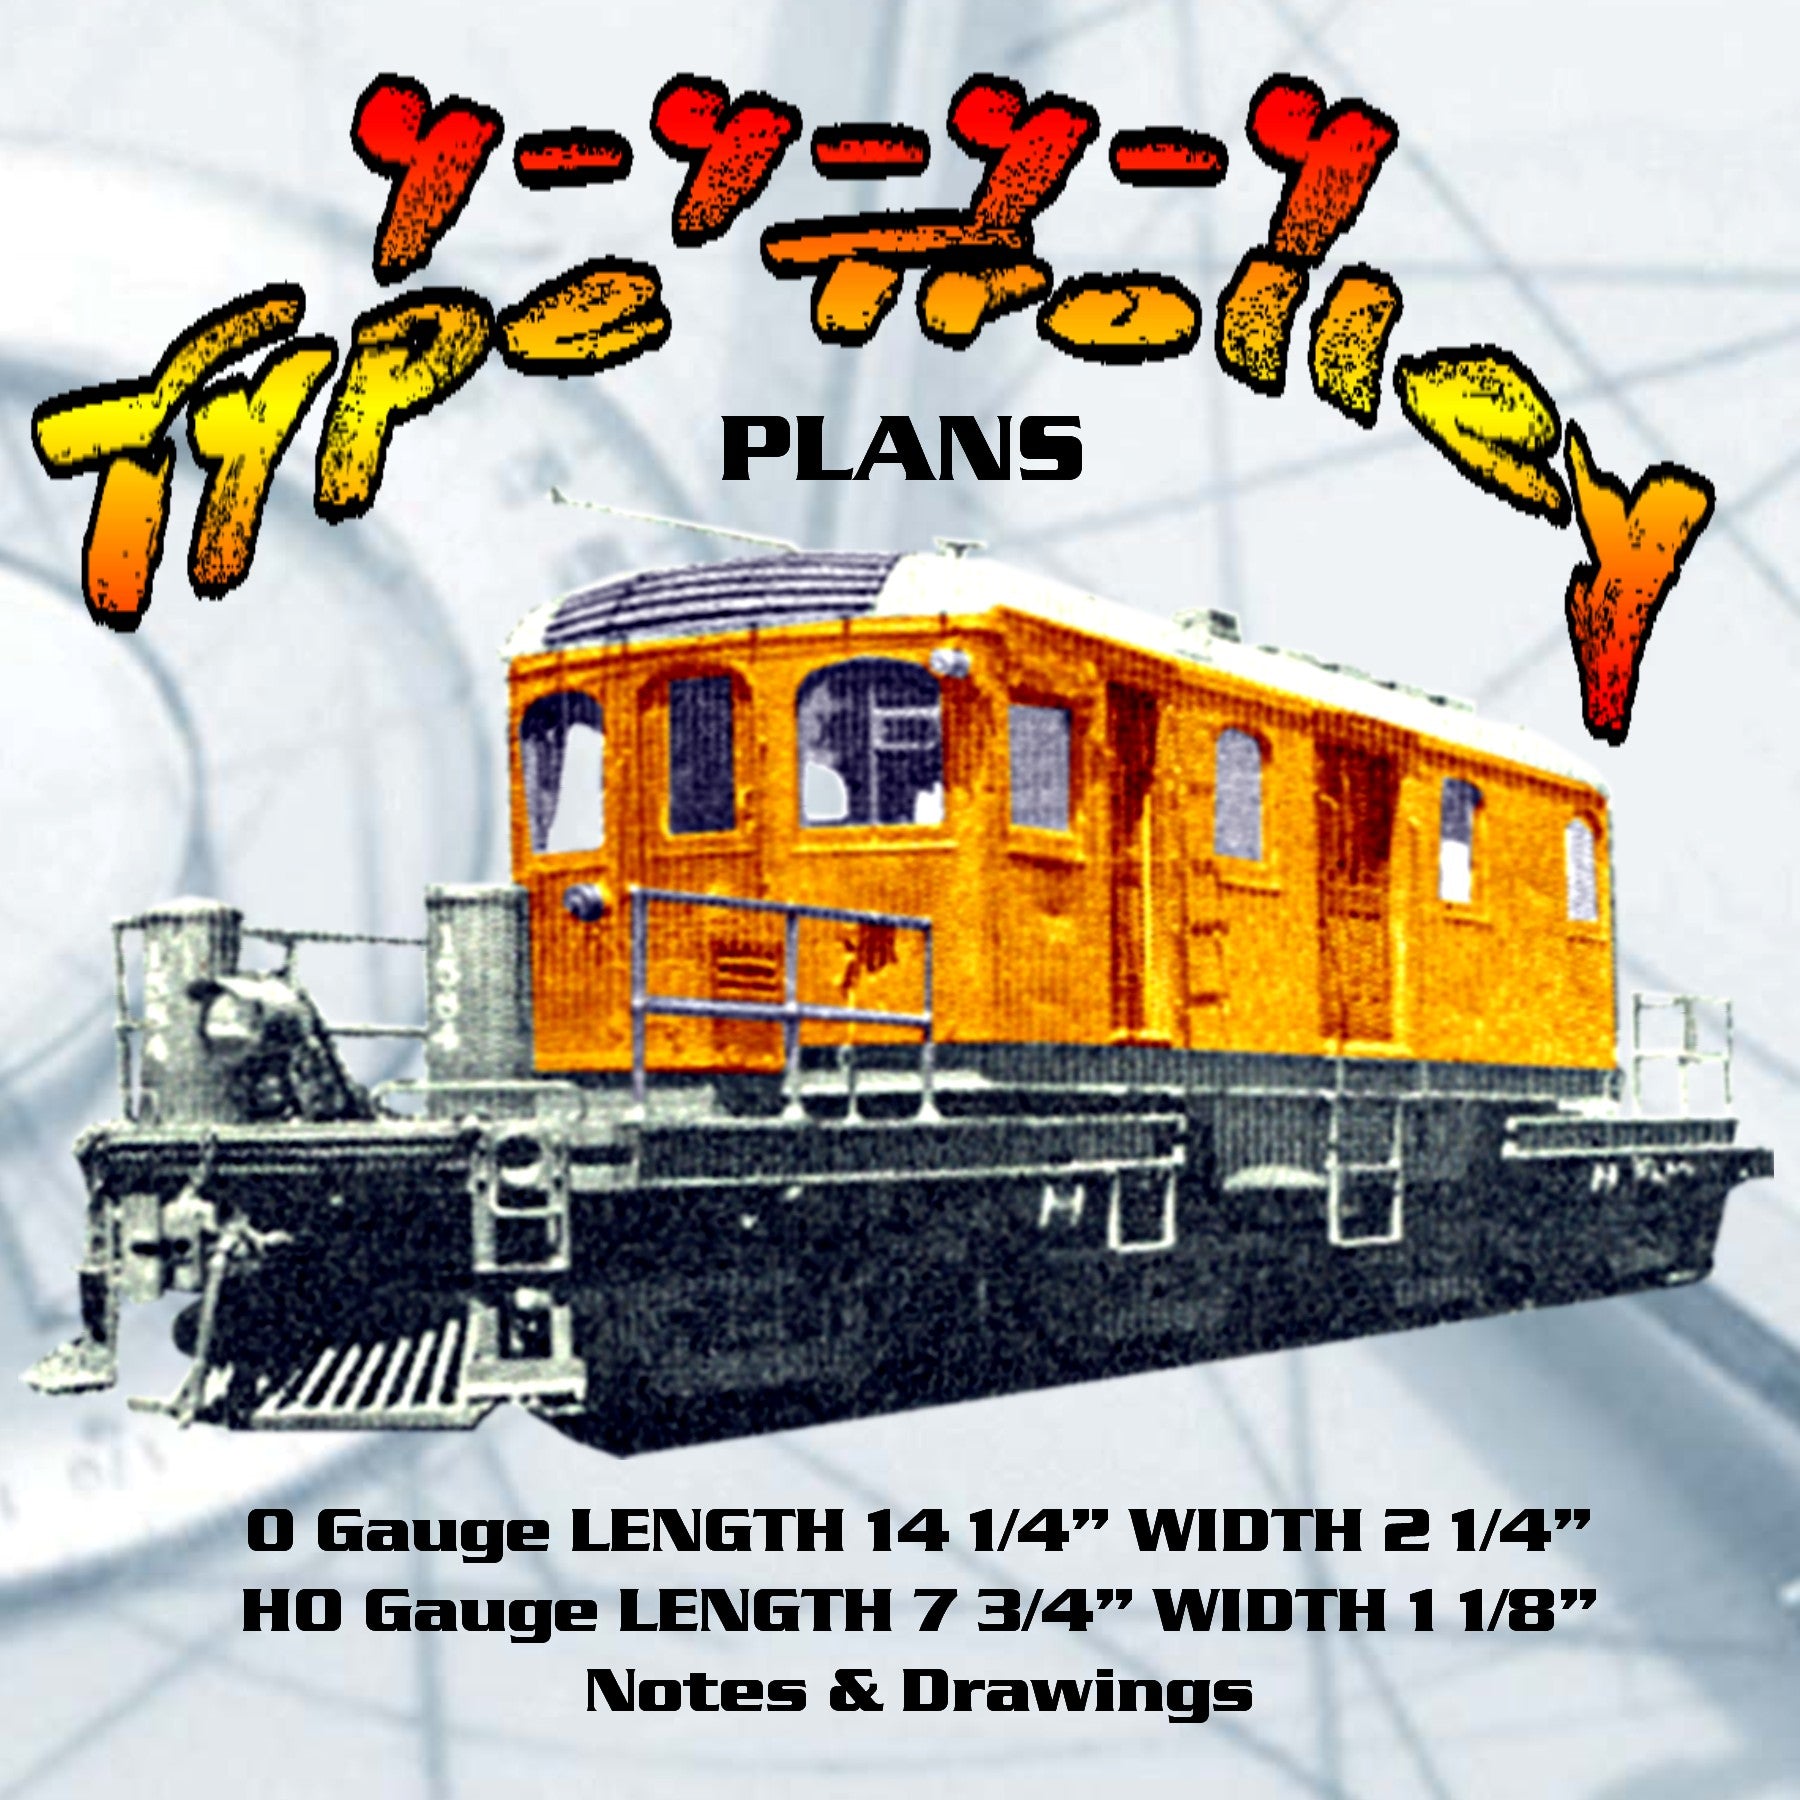 full size plans vintage 1940 model railroad ho & o gauge 4-4-4-4 trolley